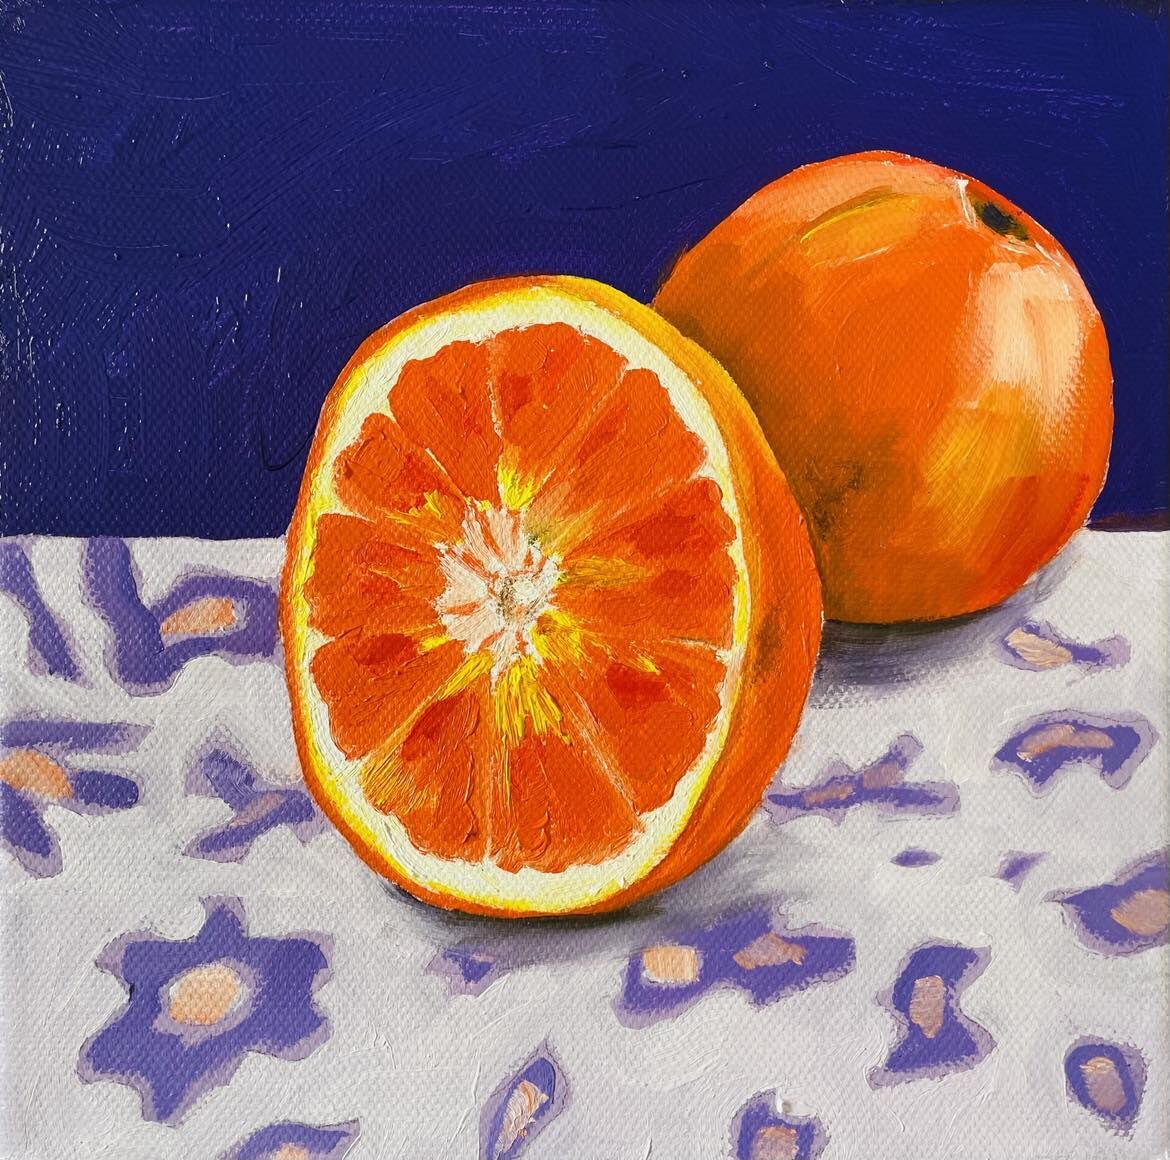 Orange on purple background